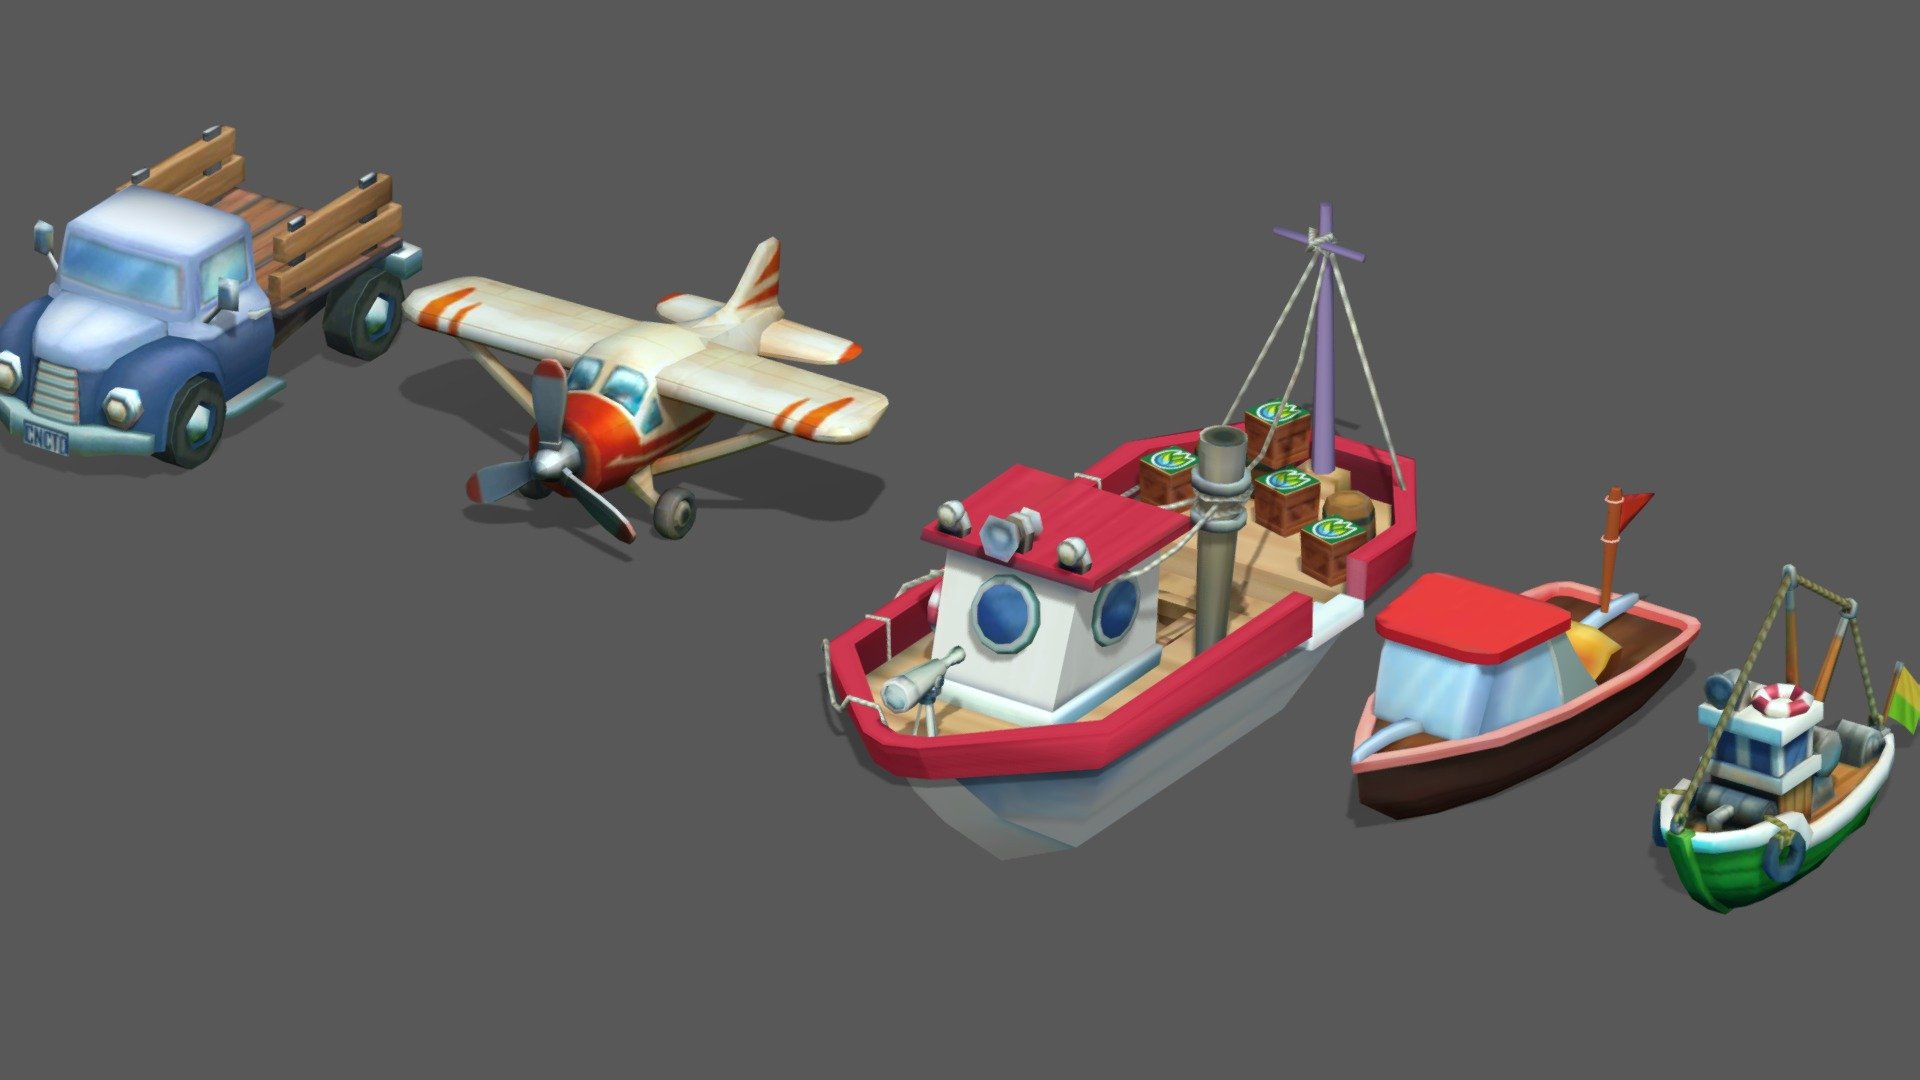 lowpoly Vehicles 
* Ship
* Boat
* plane
* truck
* fishing boat - Lowpoly Vehicles Pack - 3D model by Usman Ahmed GIll (@usman.ahmed.gill.93) 3d model